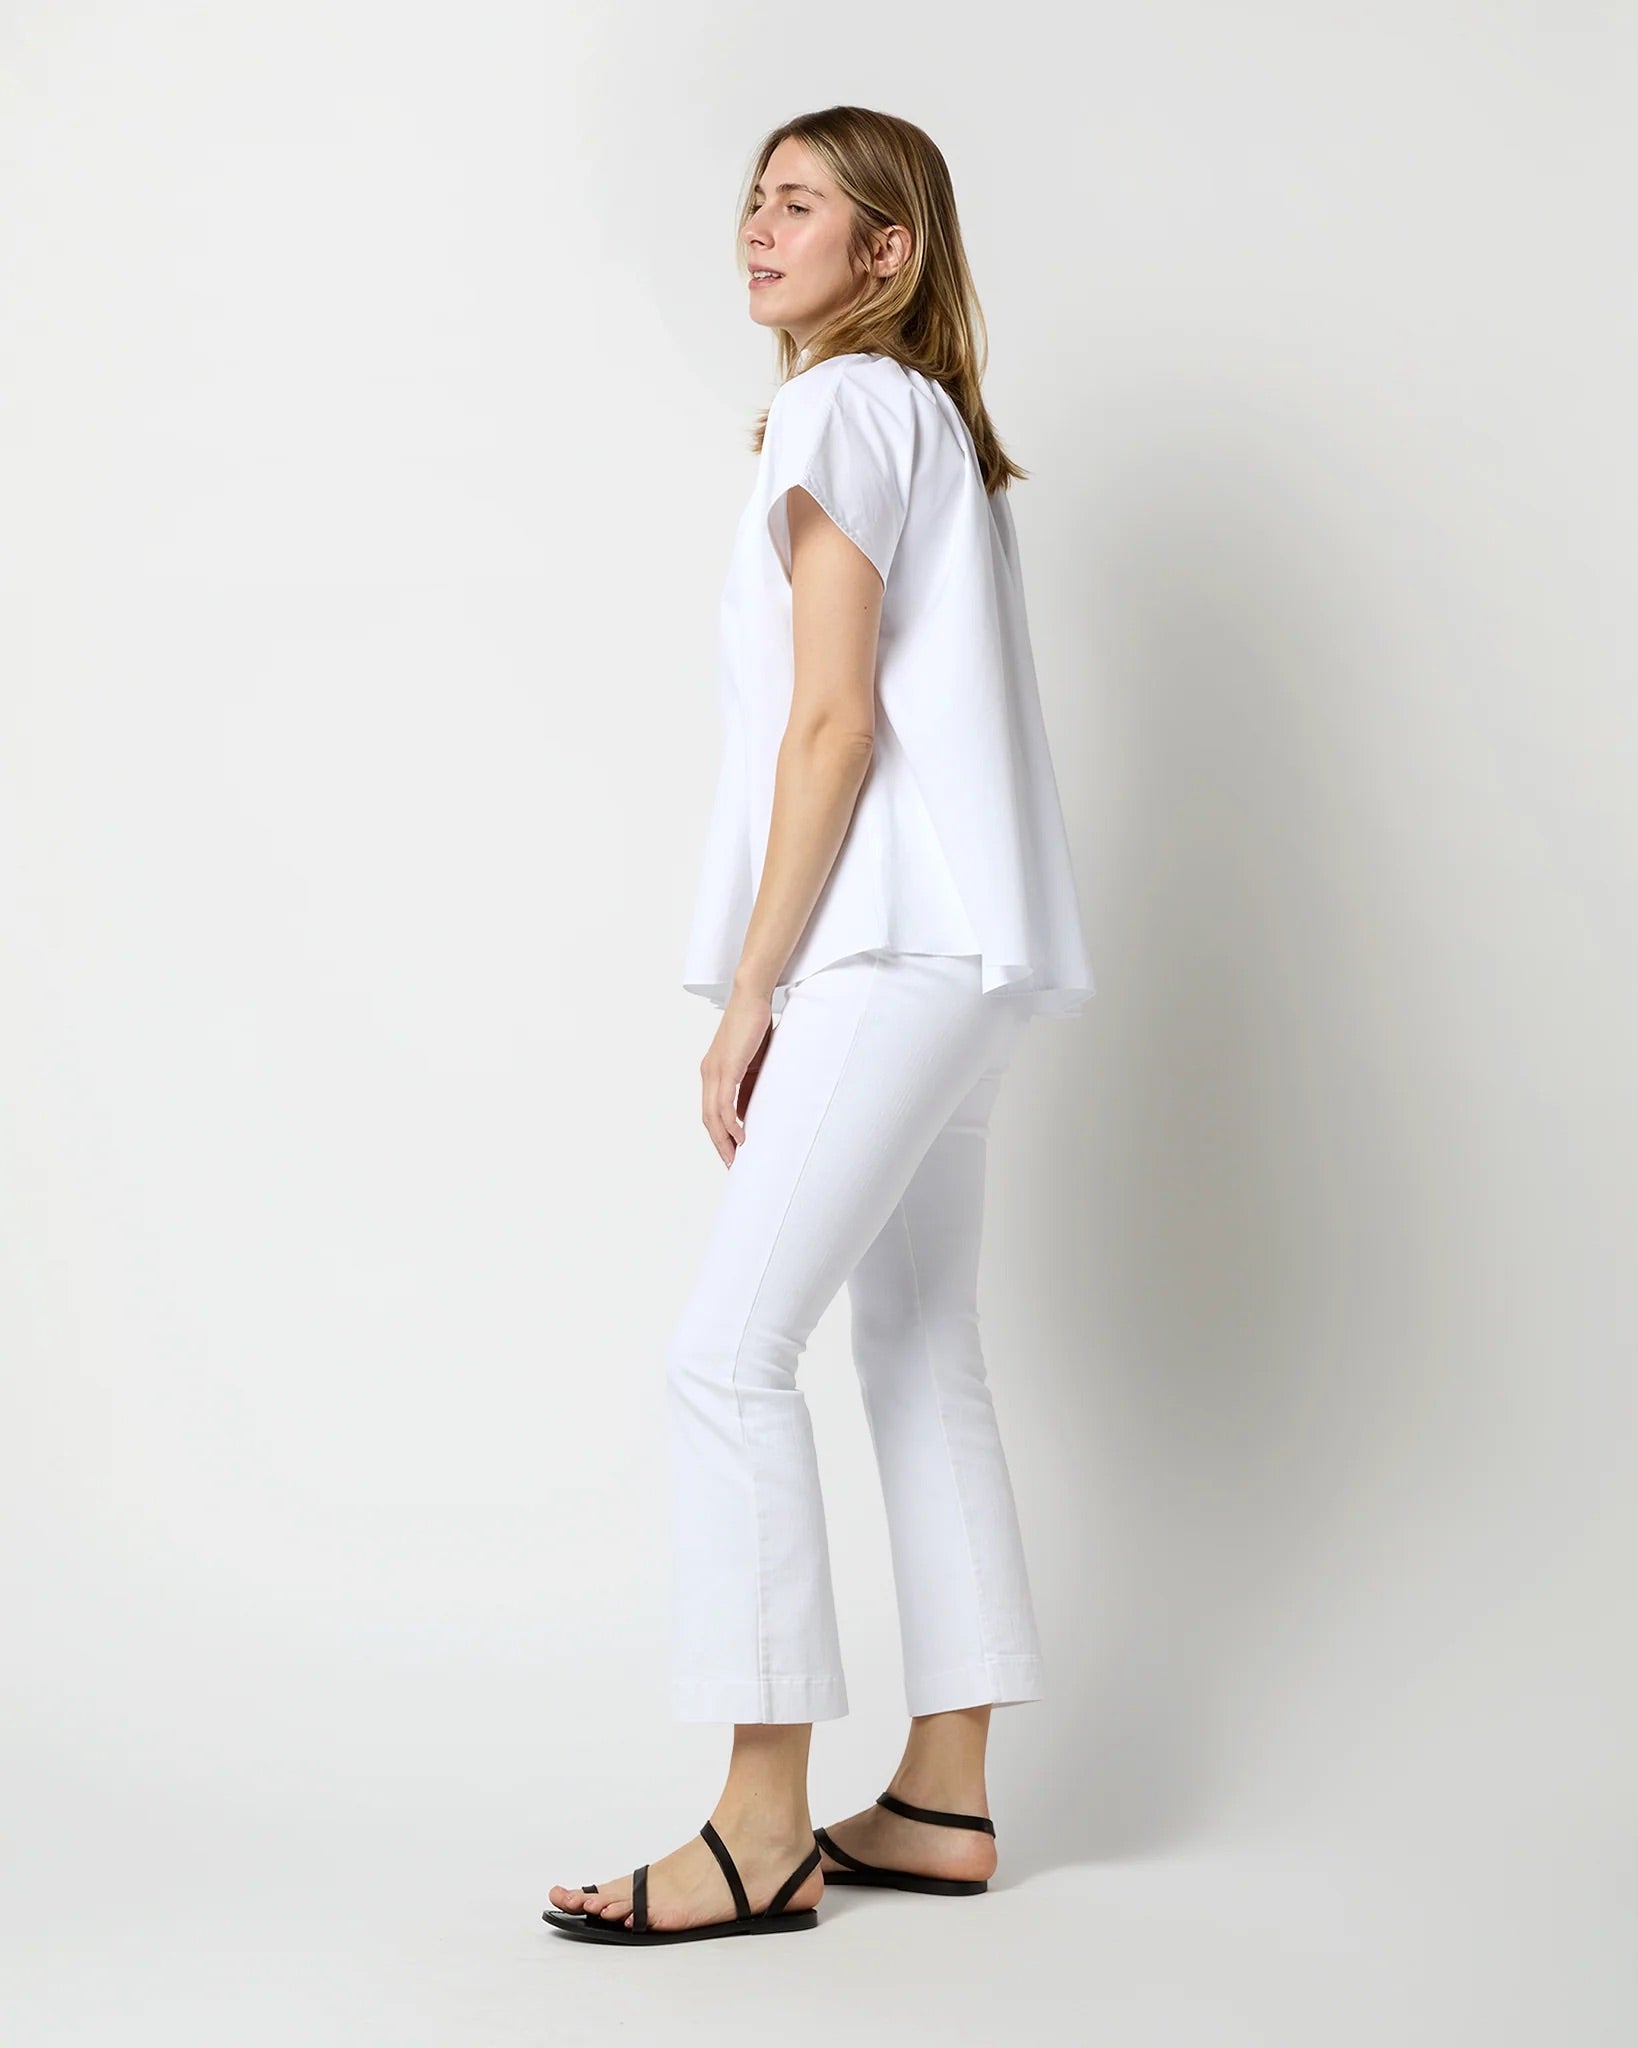 Ann Mashburn Atelier Kami Top in White